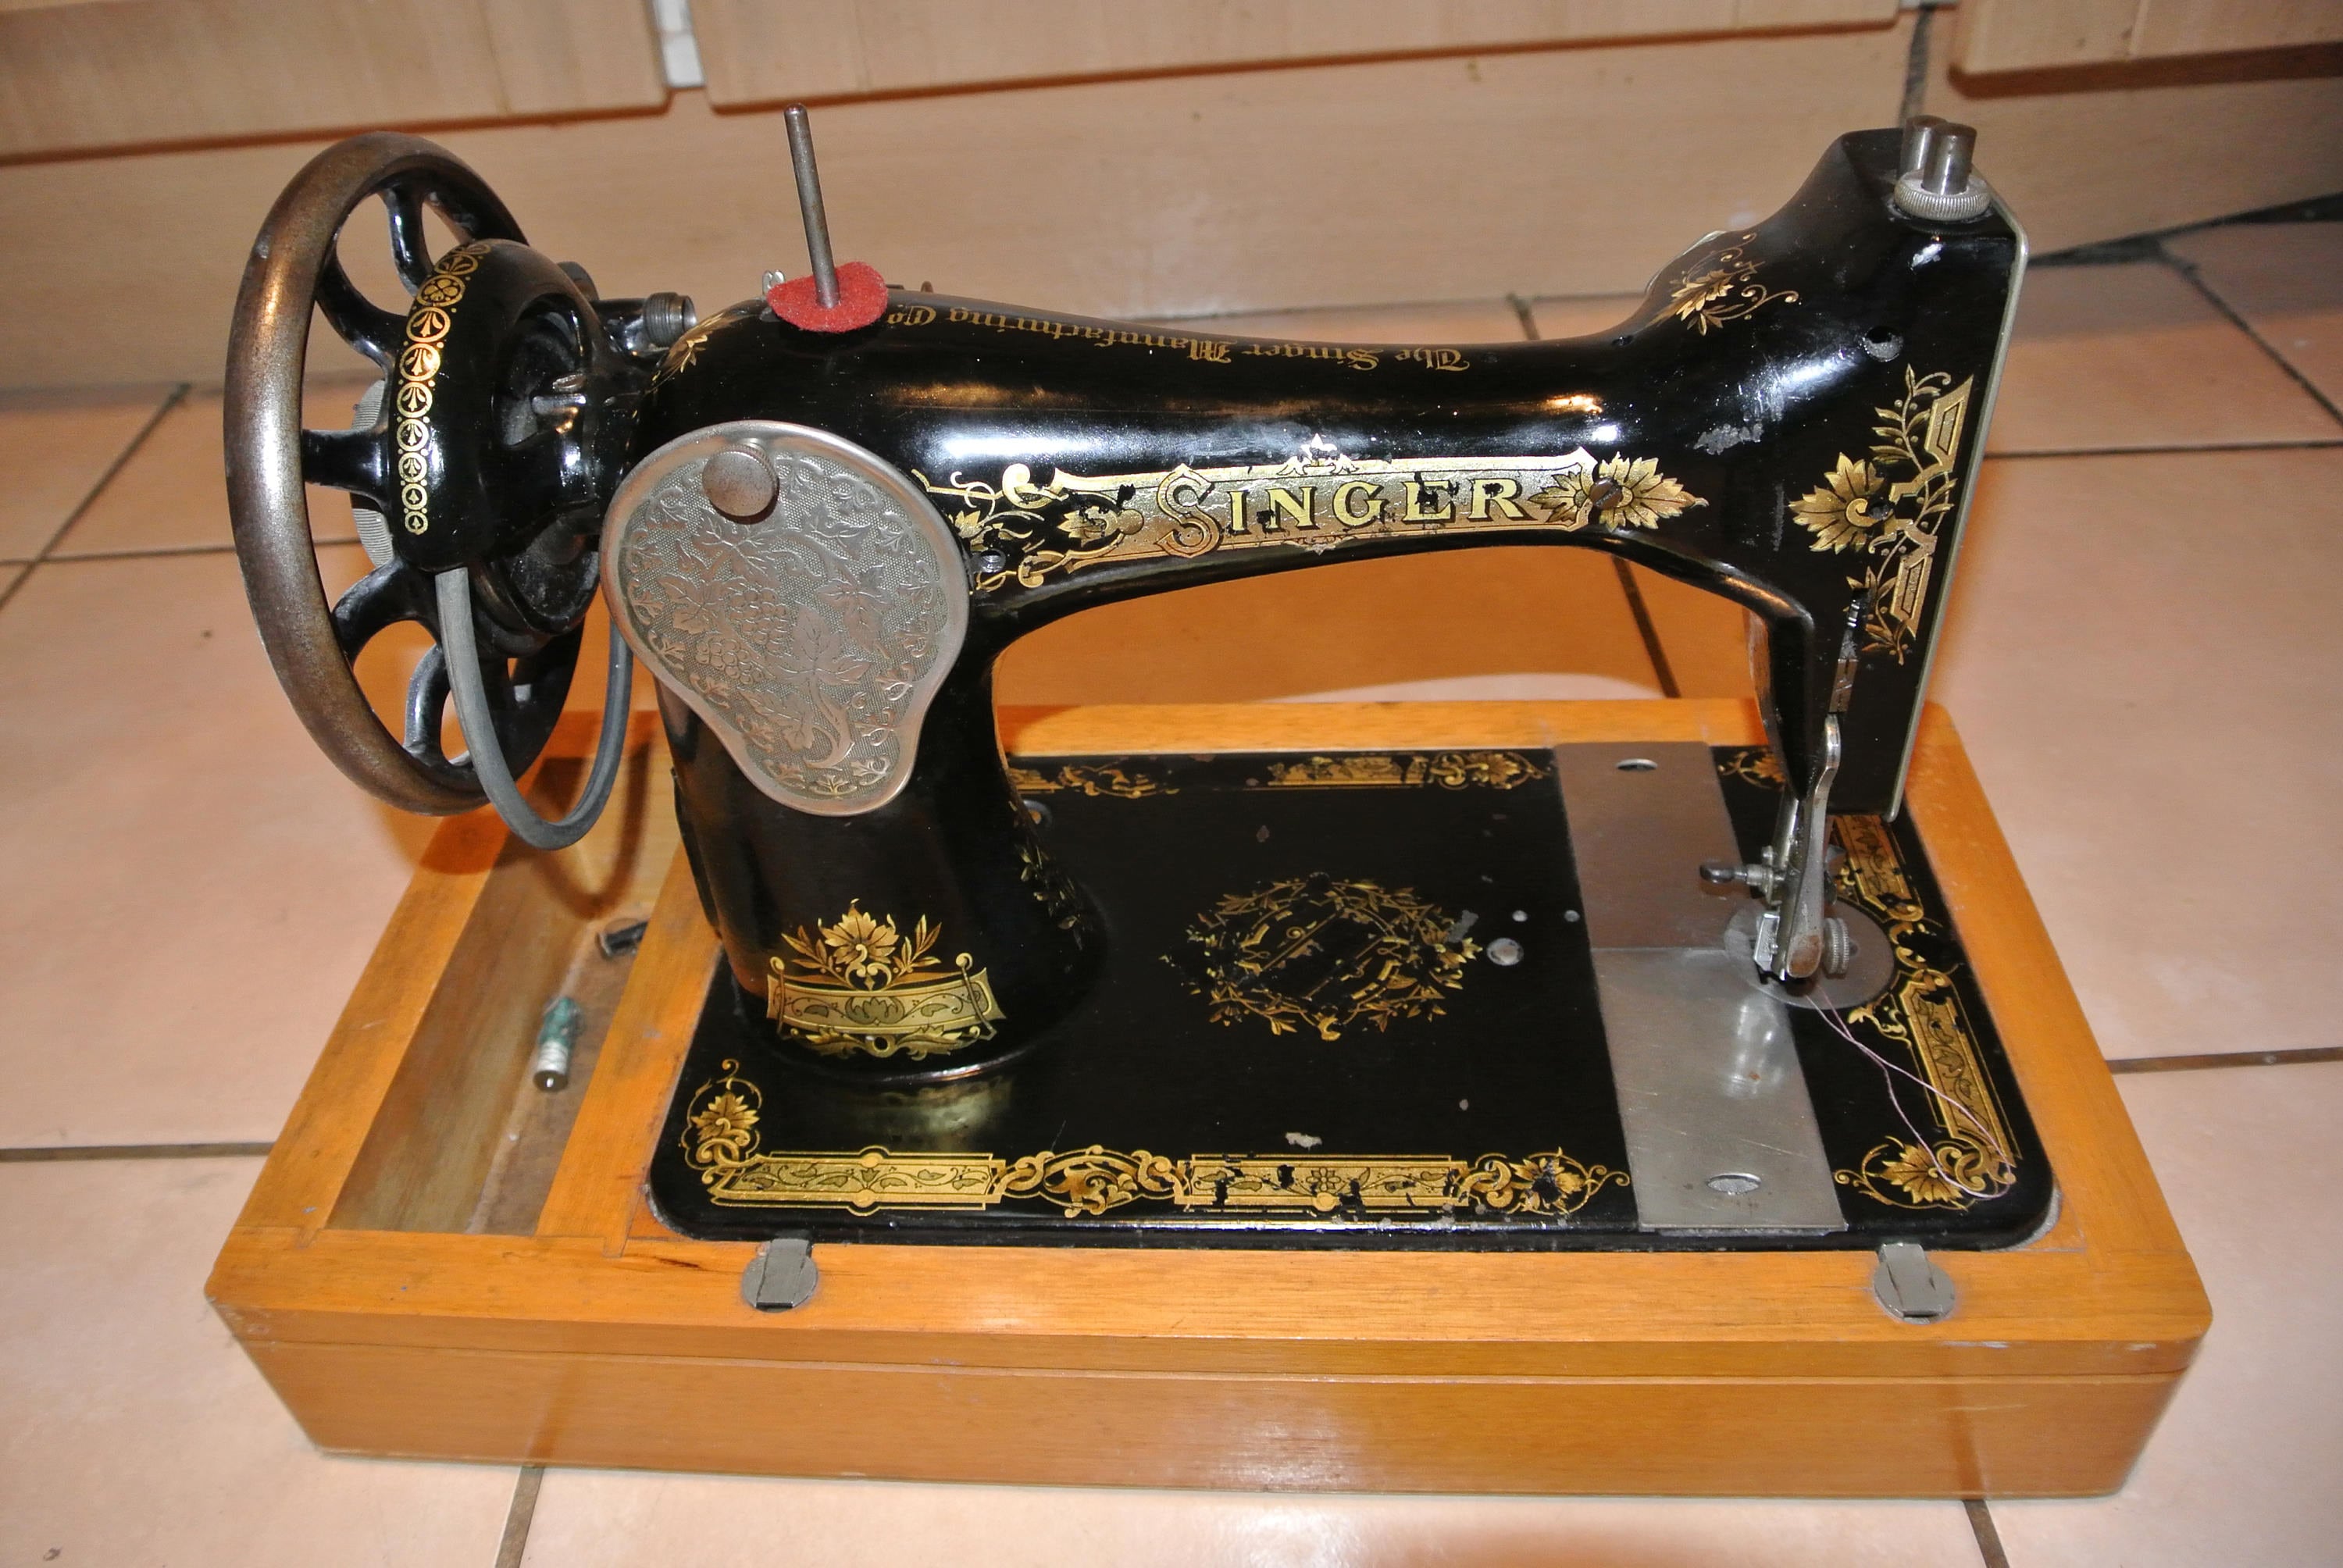 Original Antique Singer Sewing Machine Model 28 Commissioned